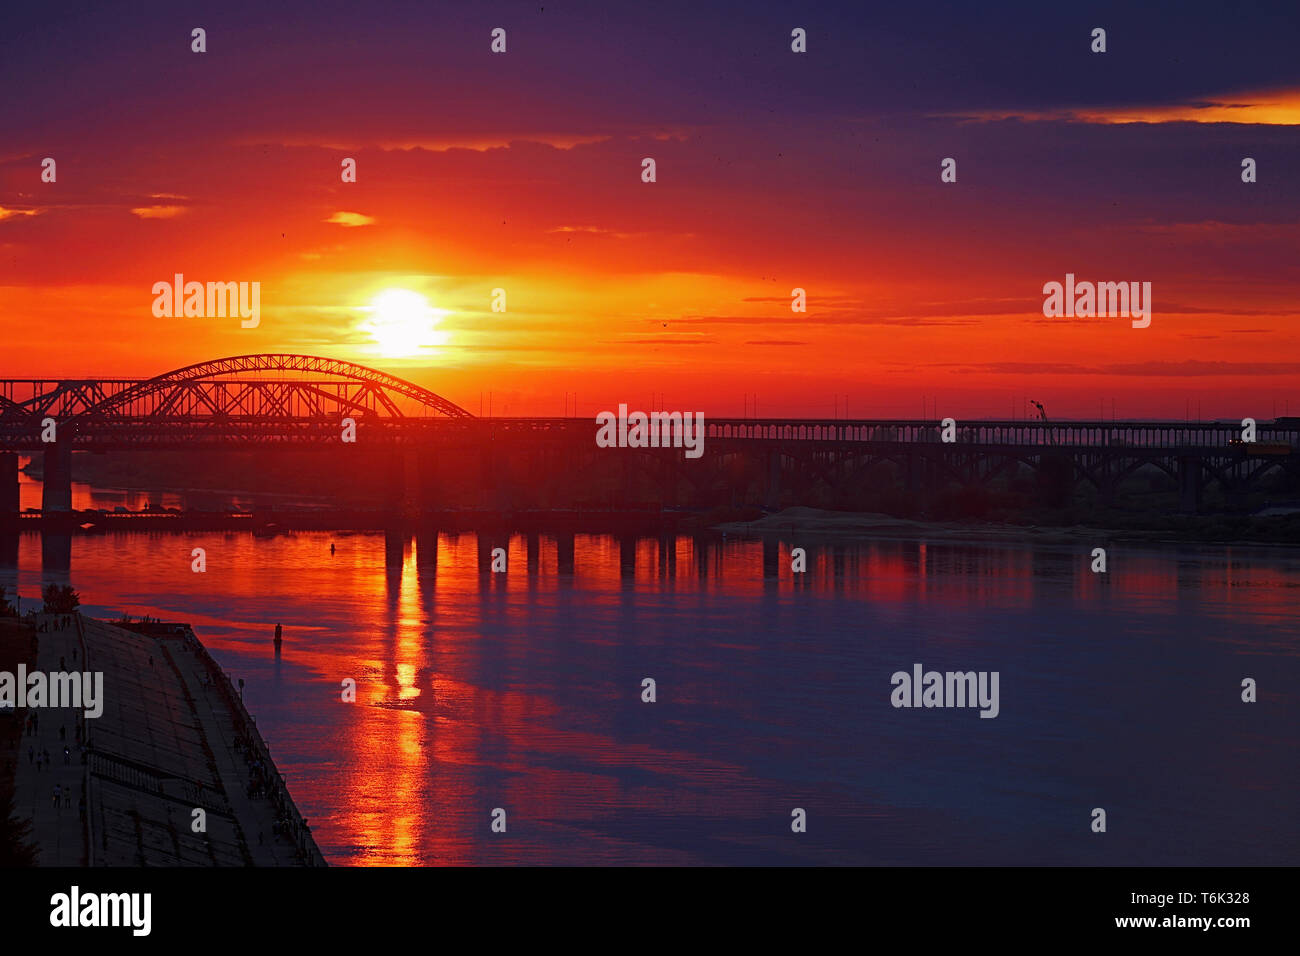 summer sunset over the river bridge Stock Photo